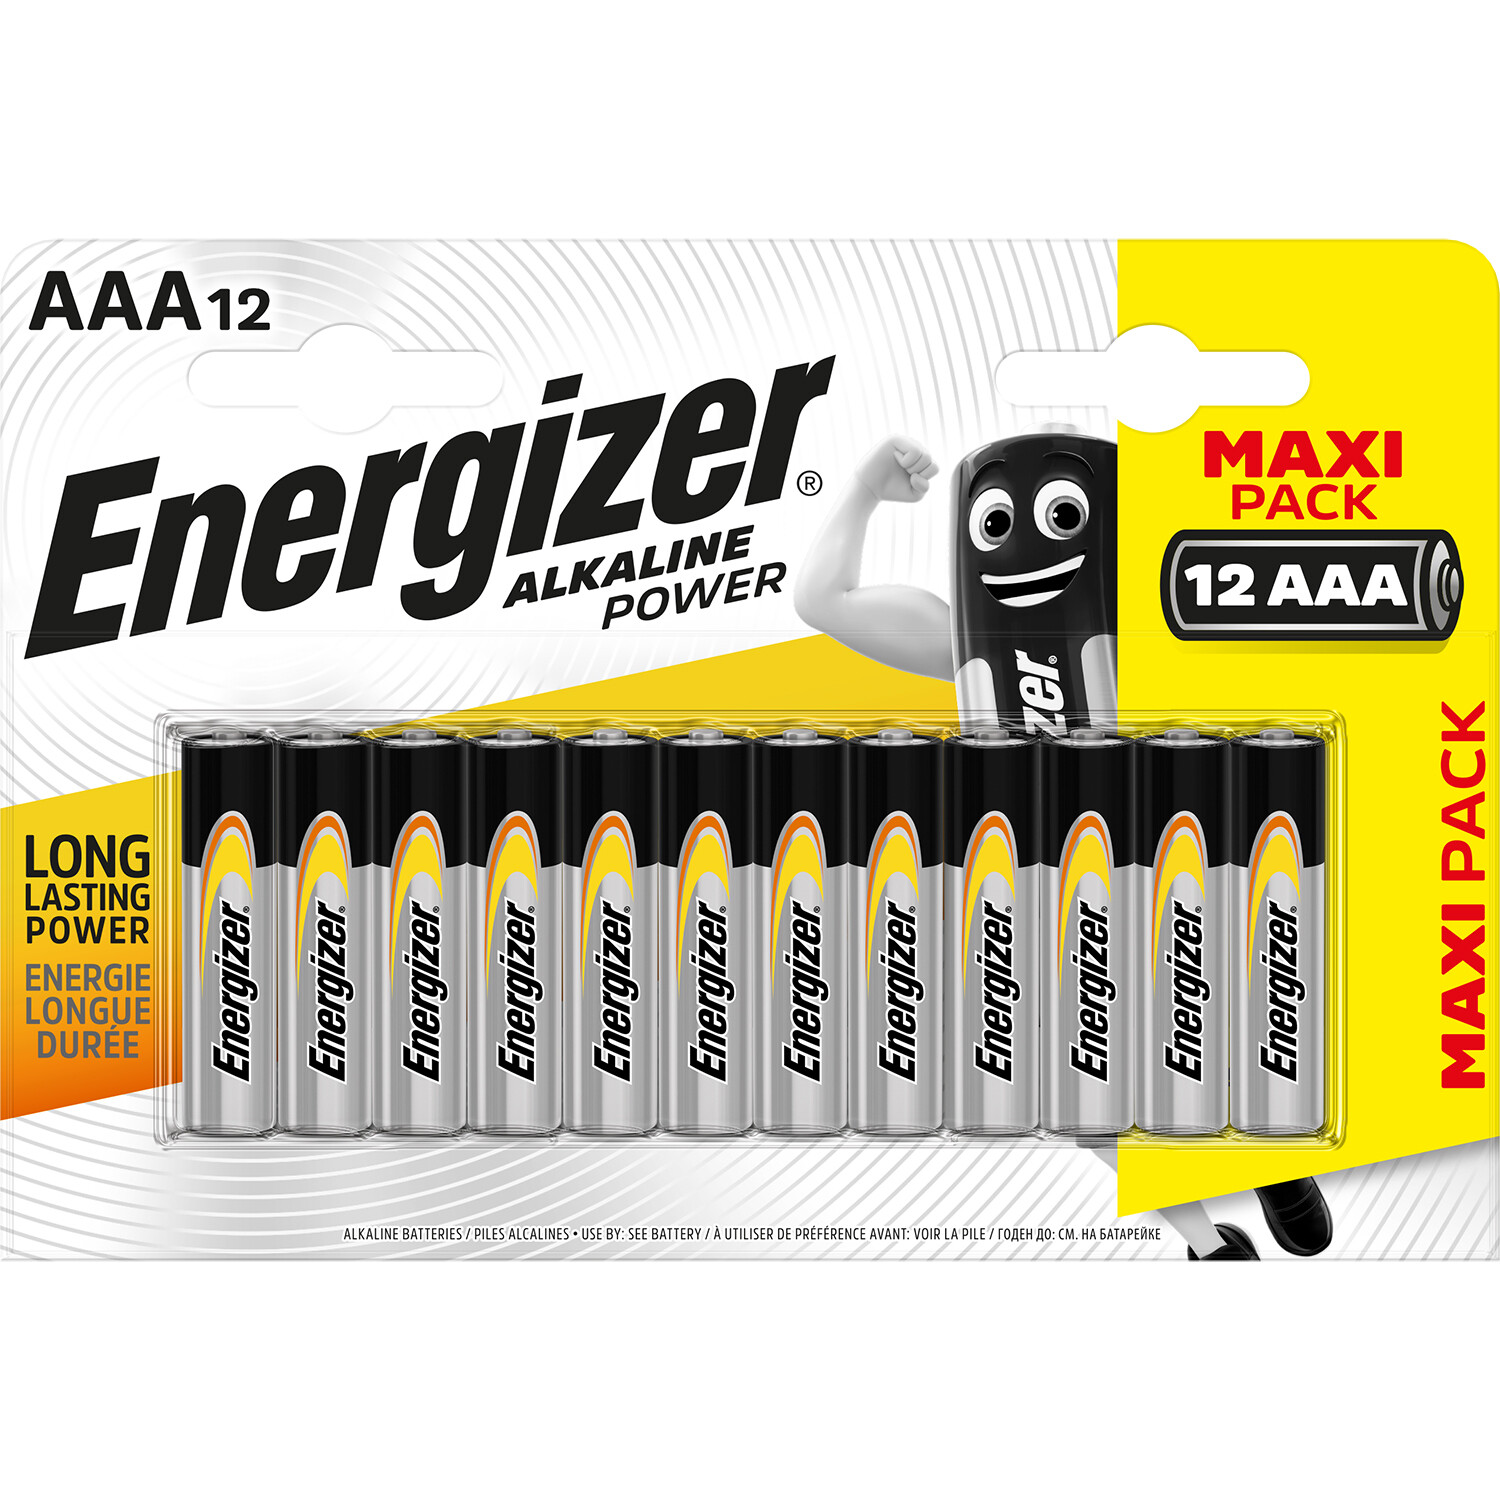 Energizer AAA 12 Pack Alkaline Batteries Image